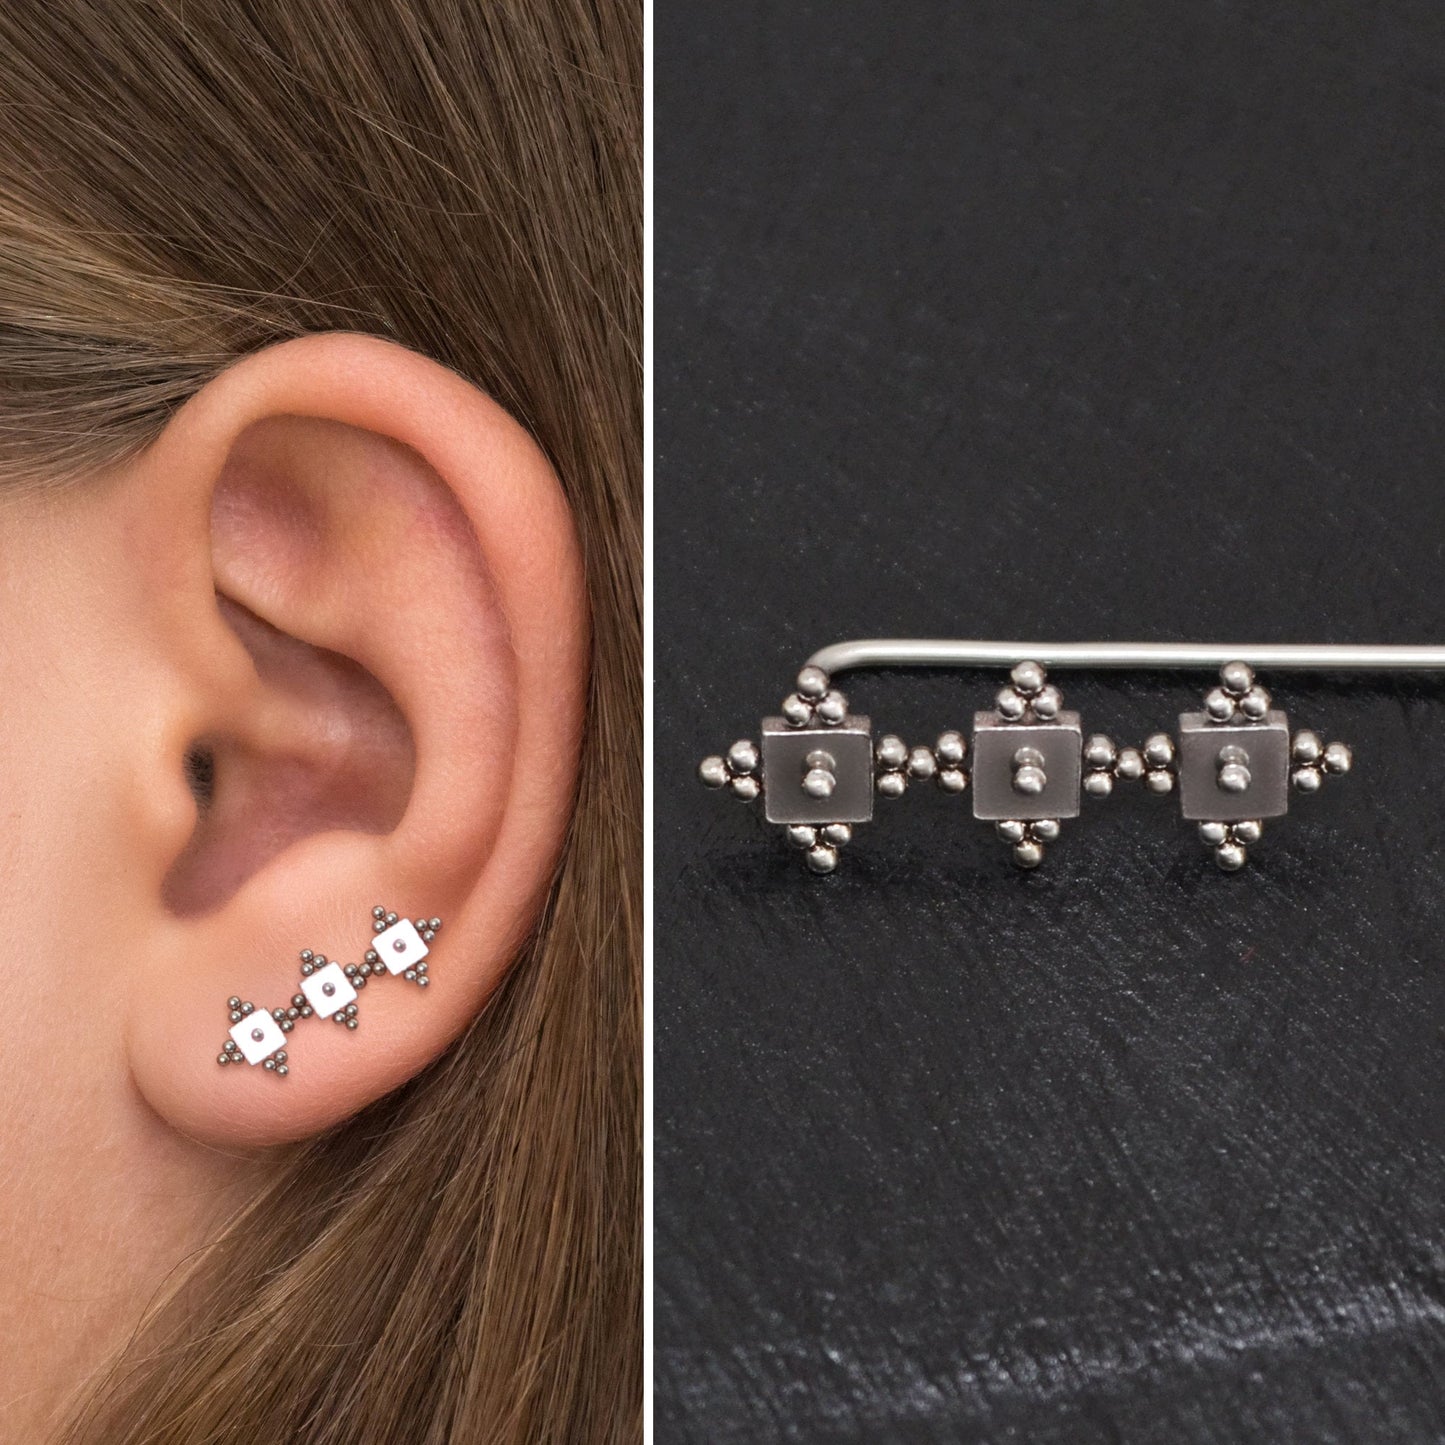 Climbing Ear Cuff Earrings Surgical Steel - TitaniumFashion